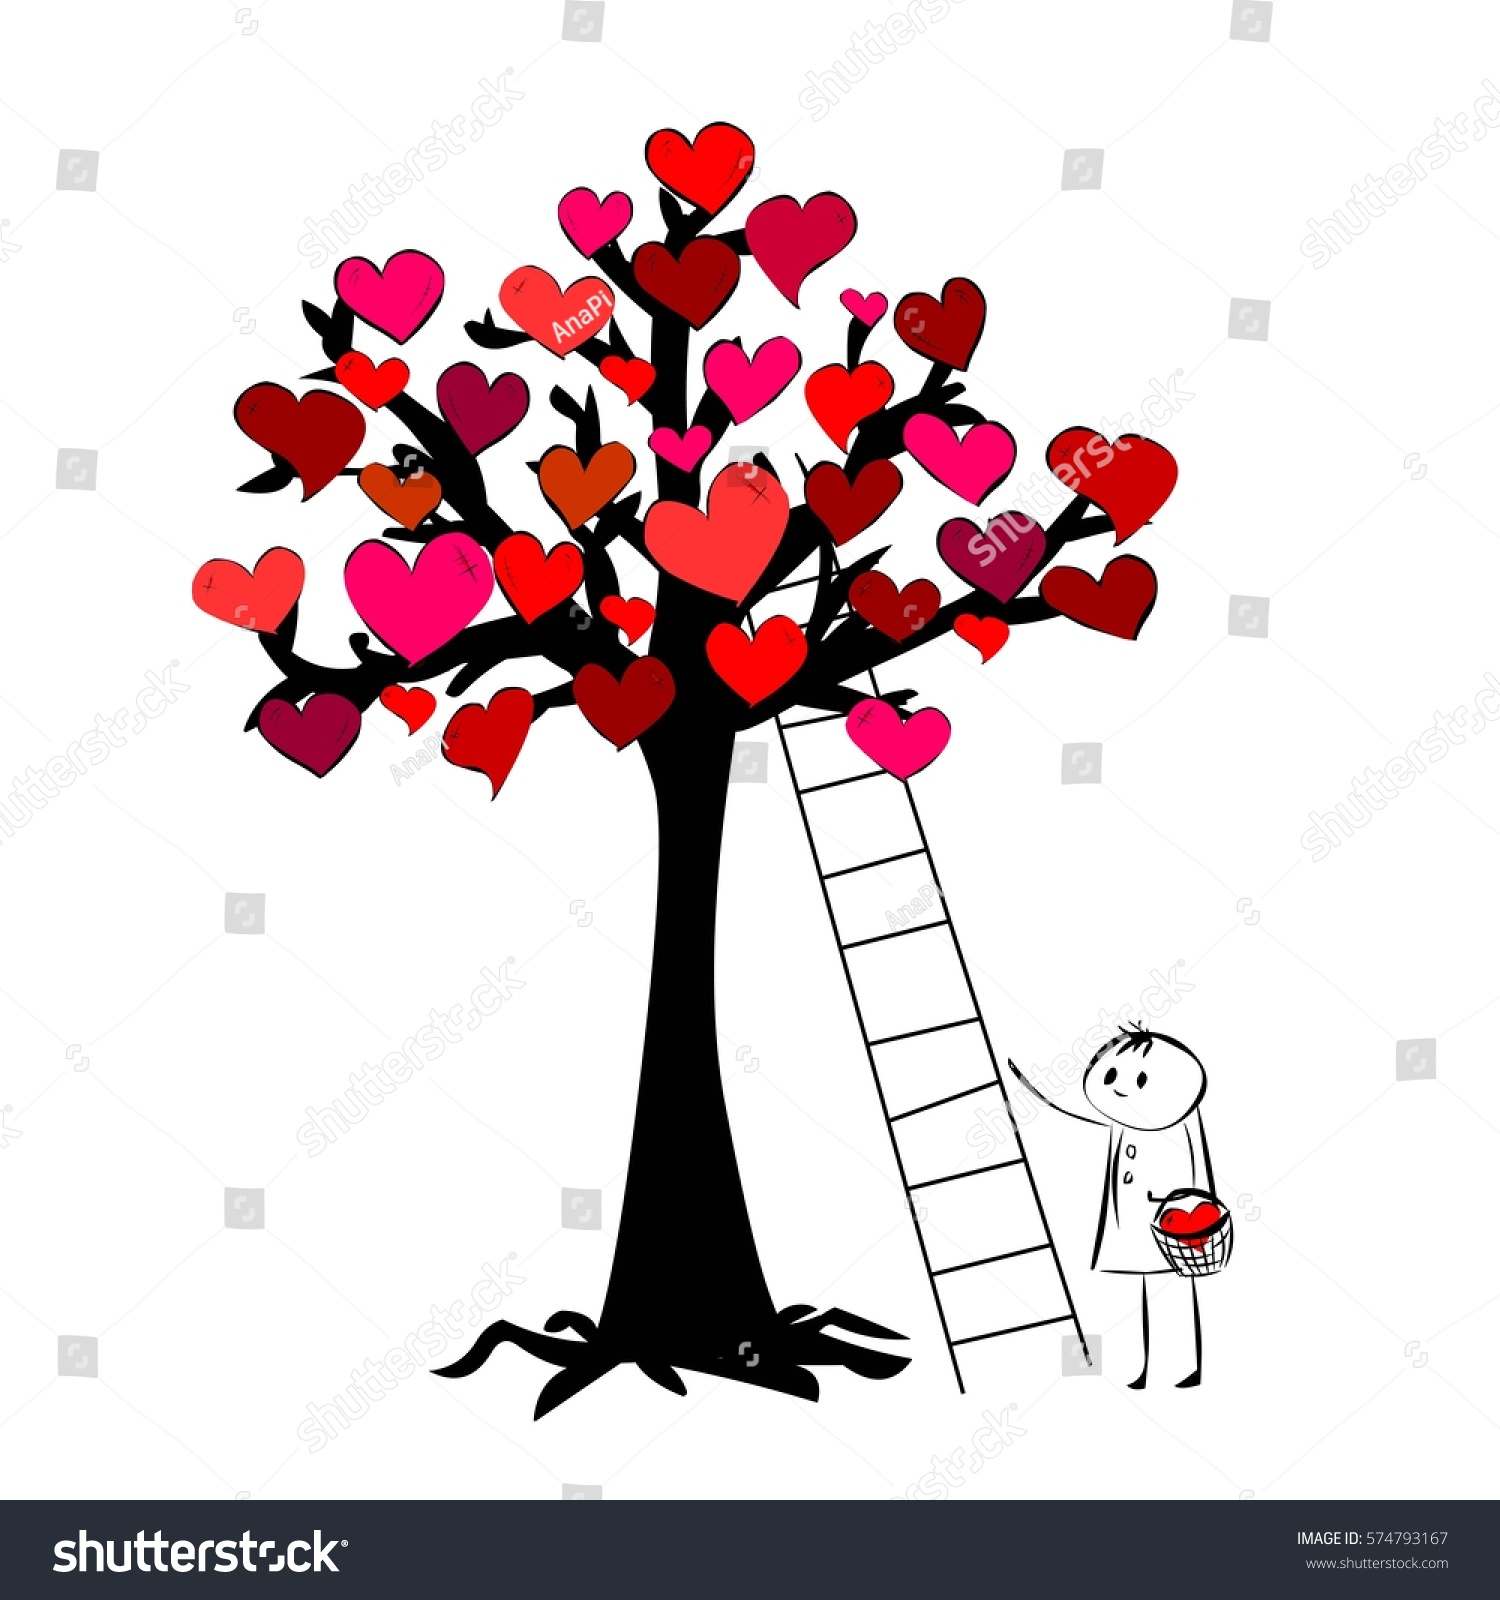 Tree Hearts Stock Vector 574793167 - Shutterstock